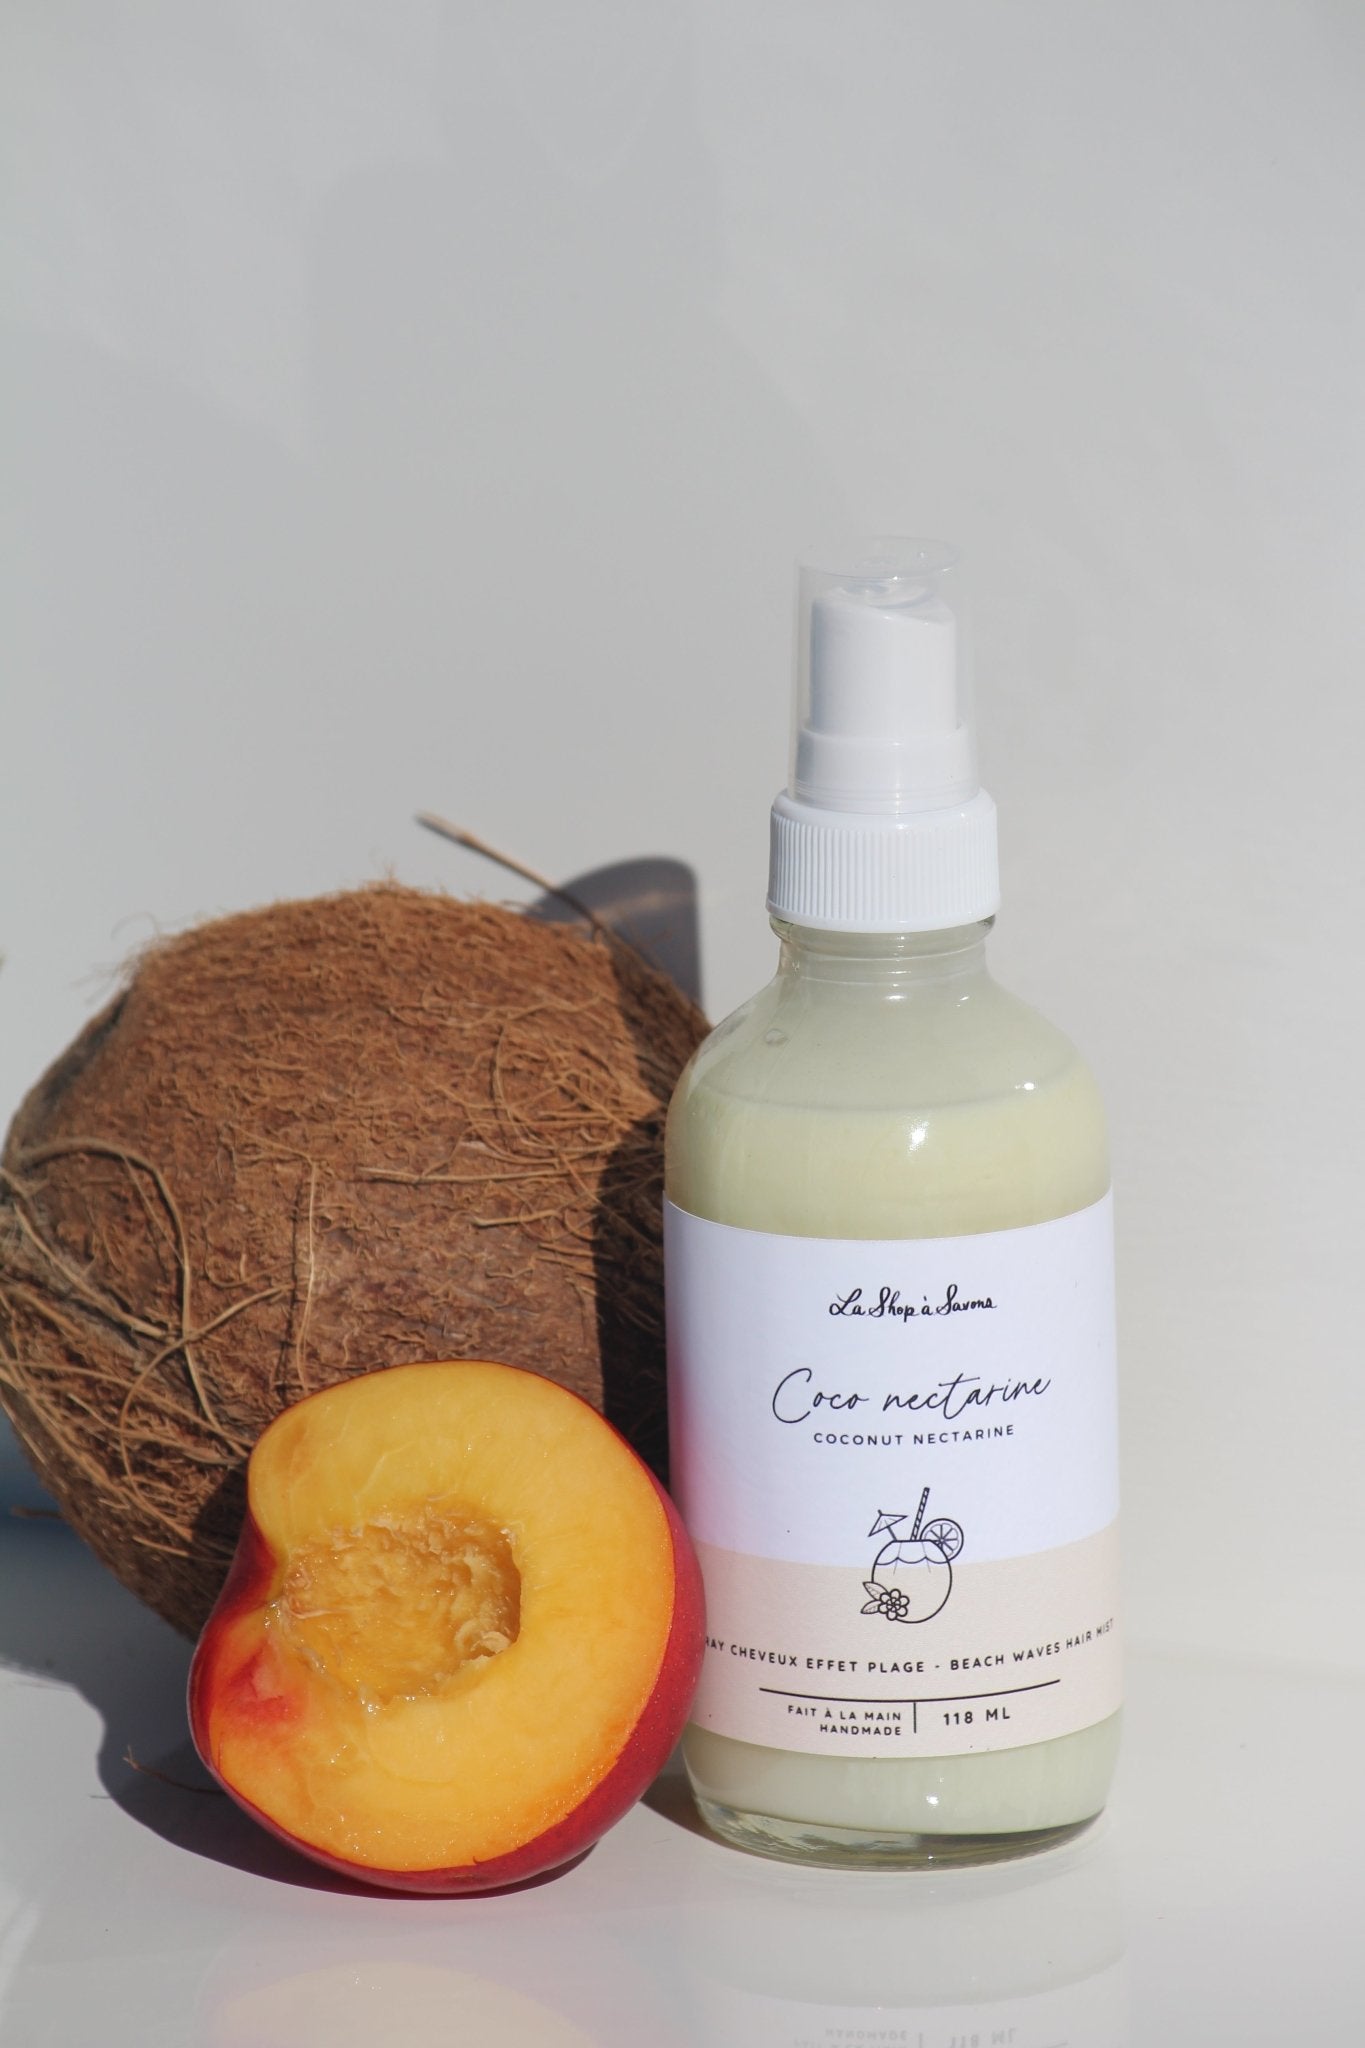 Spray Cheveux Effet Plage - Coco nectarine - La Shop à Savons Inc.